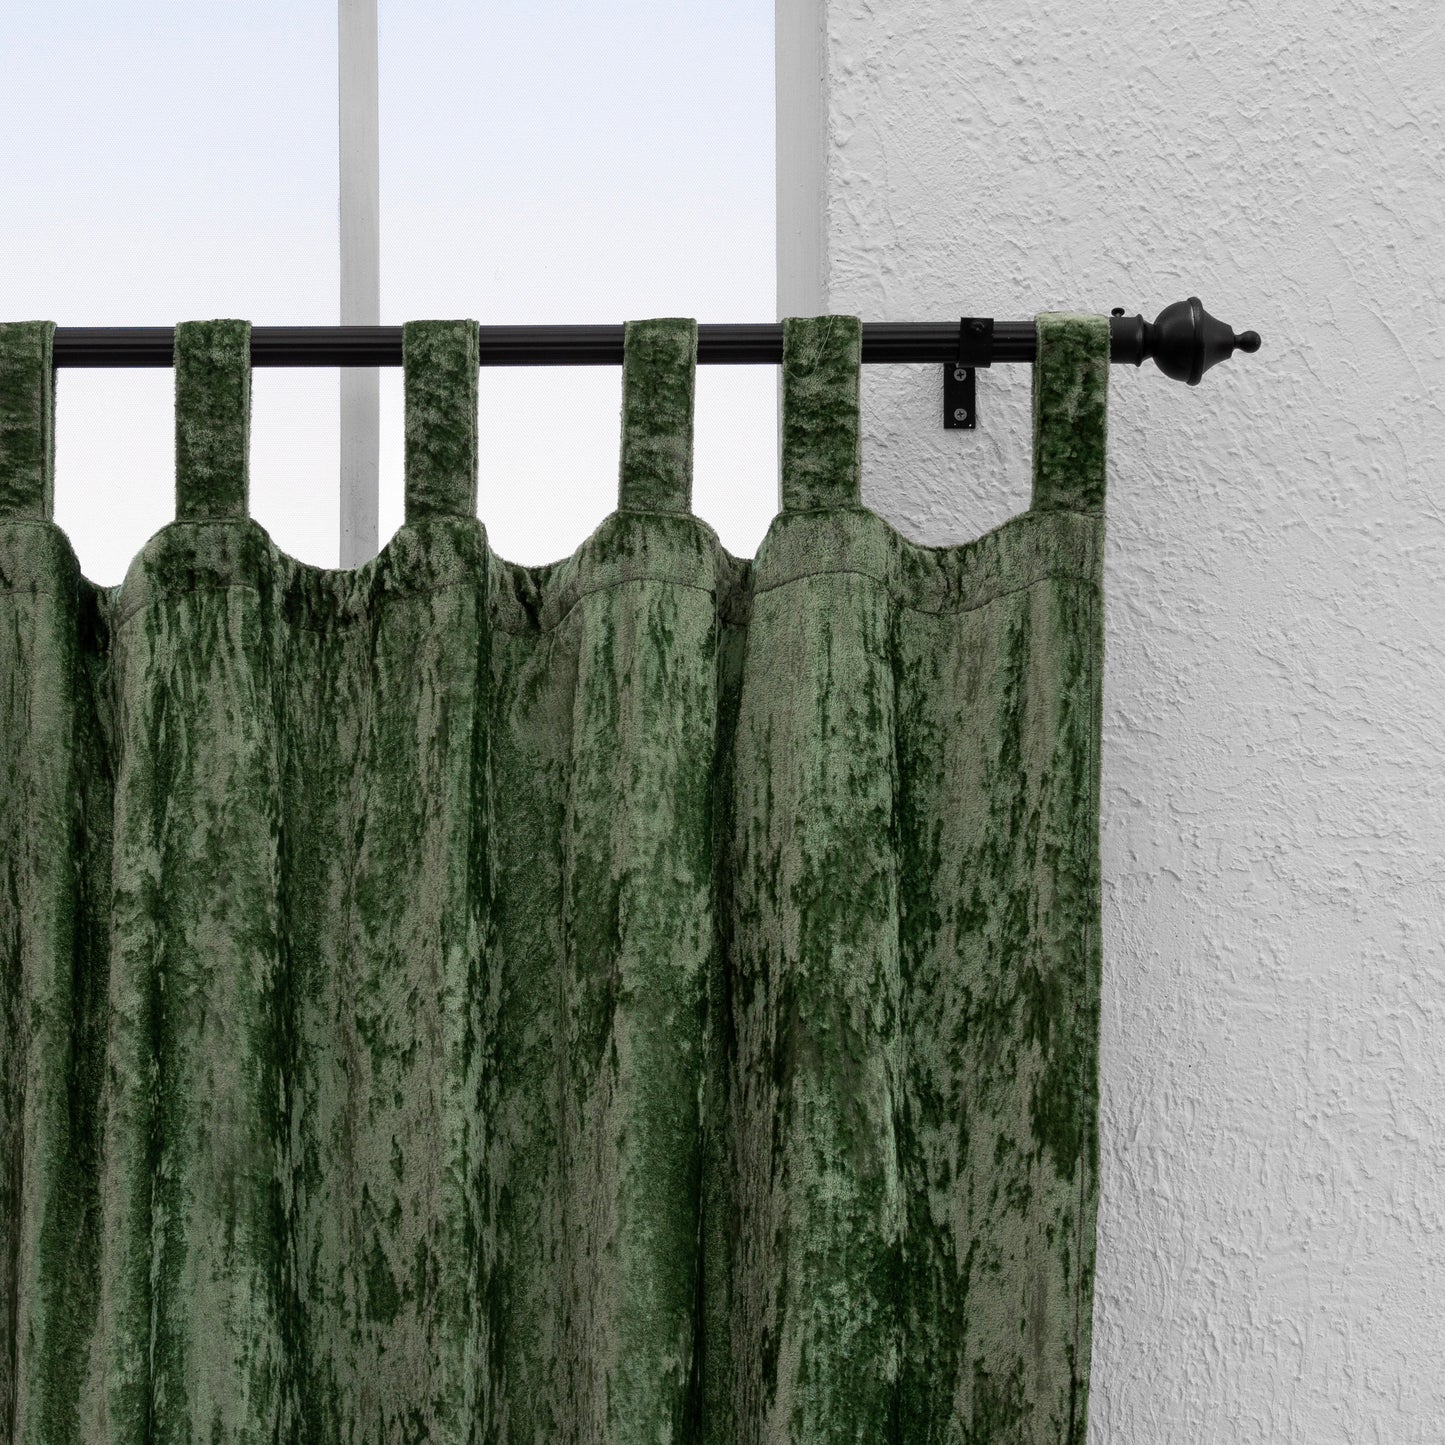 Sage Green Velvet Curtain - Set of 2 - I